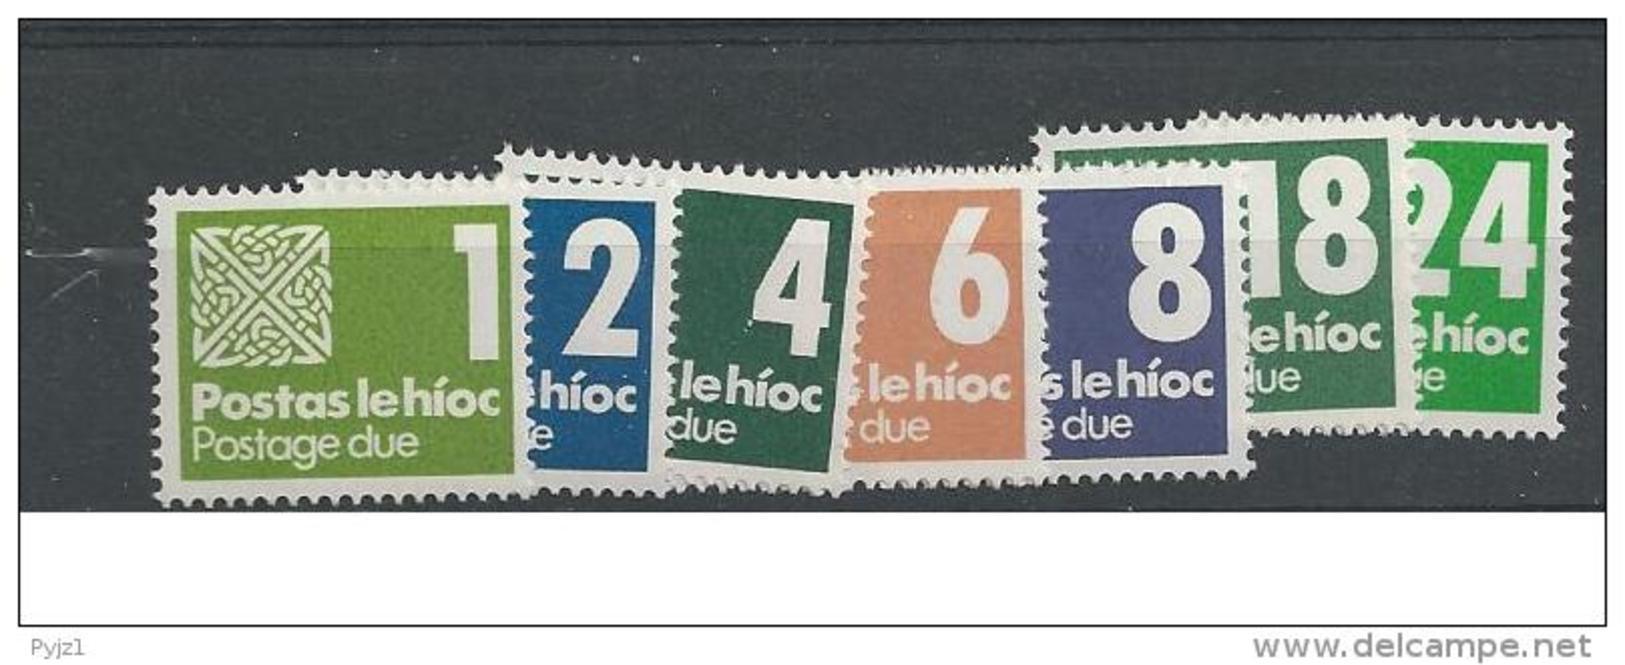 1980 MNH Ireland, Eire, Irland, Ierland, Porto, Postfris - Postage Due